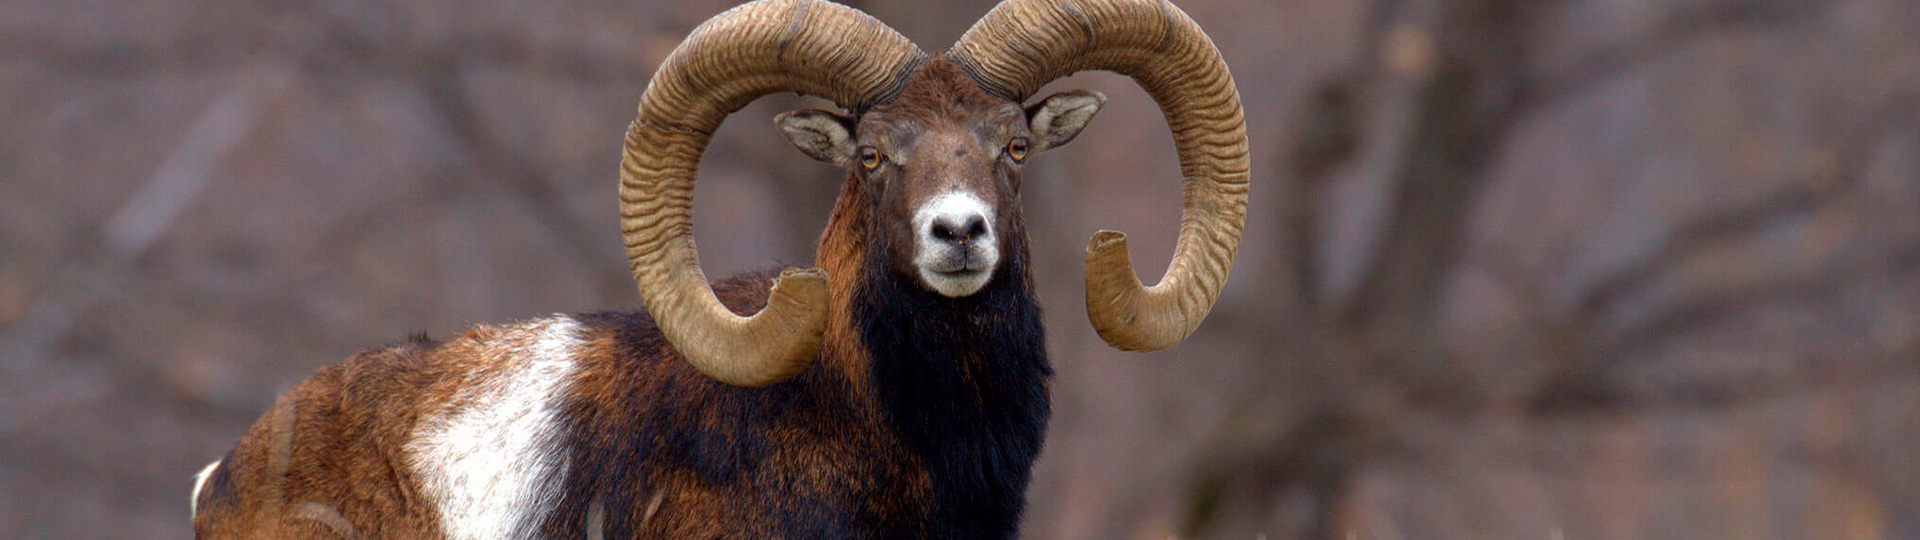 Hunting mouflon sheep in Spain